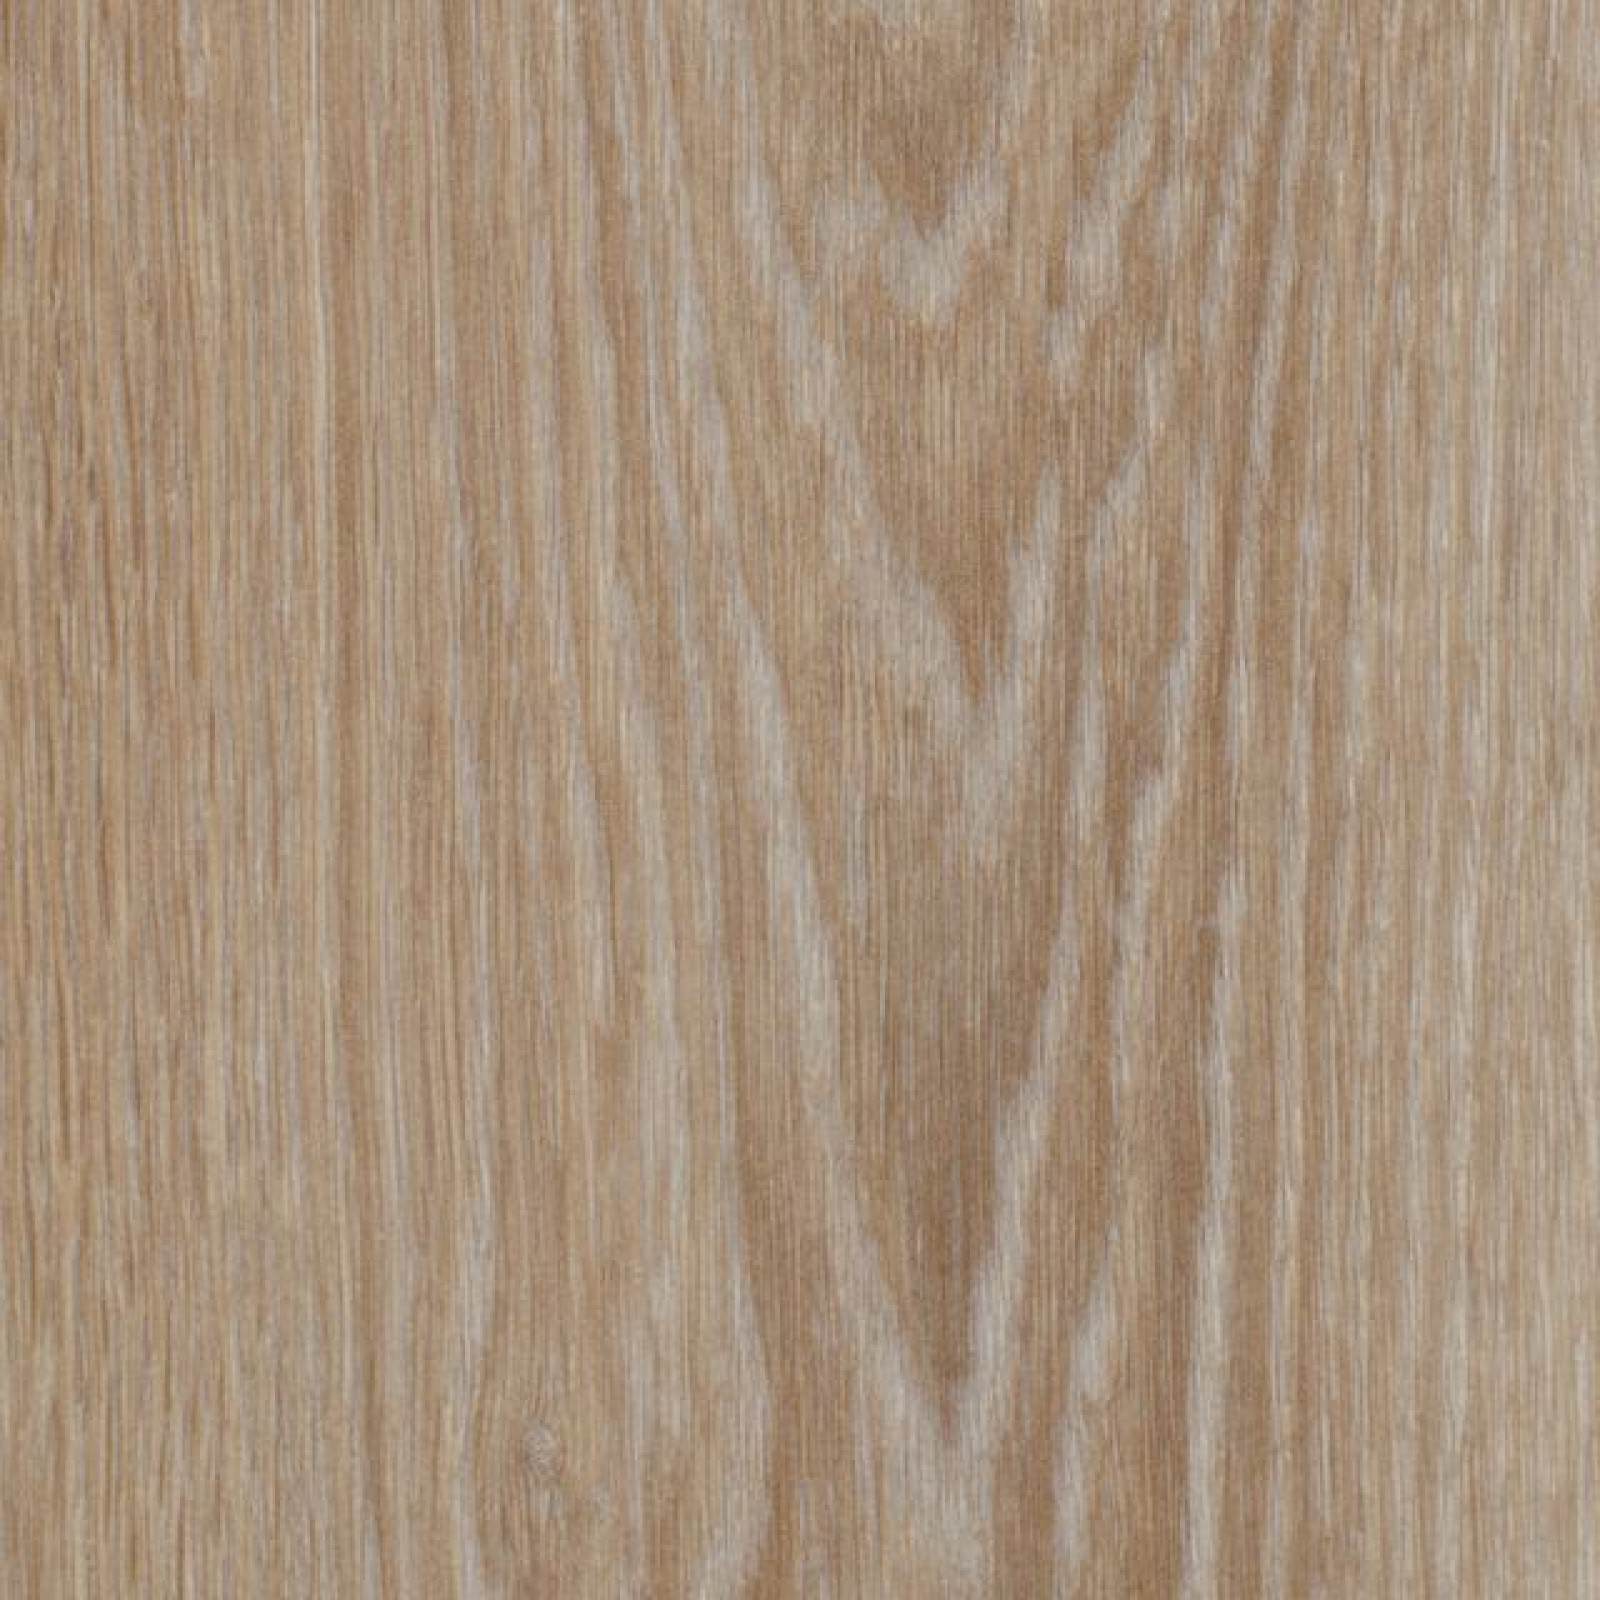 Vzor - 63712DR blond timber (75x15cm)